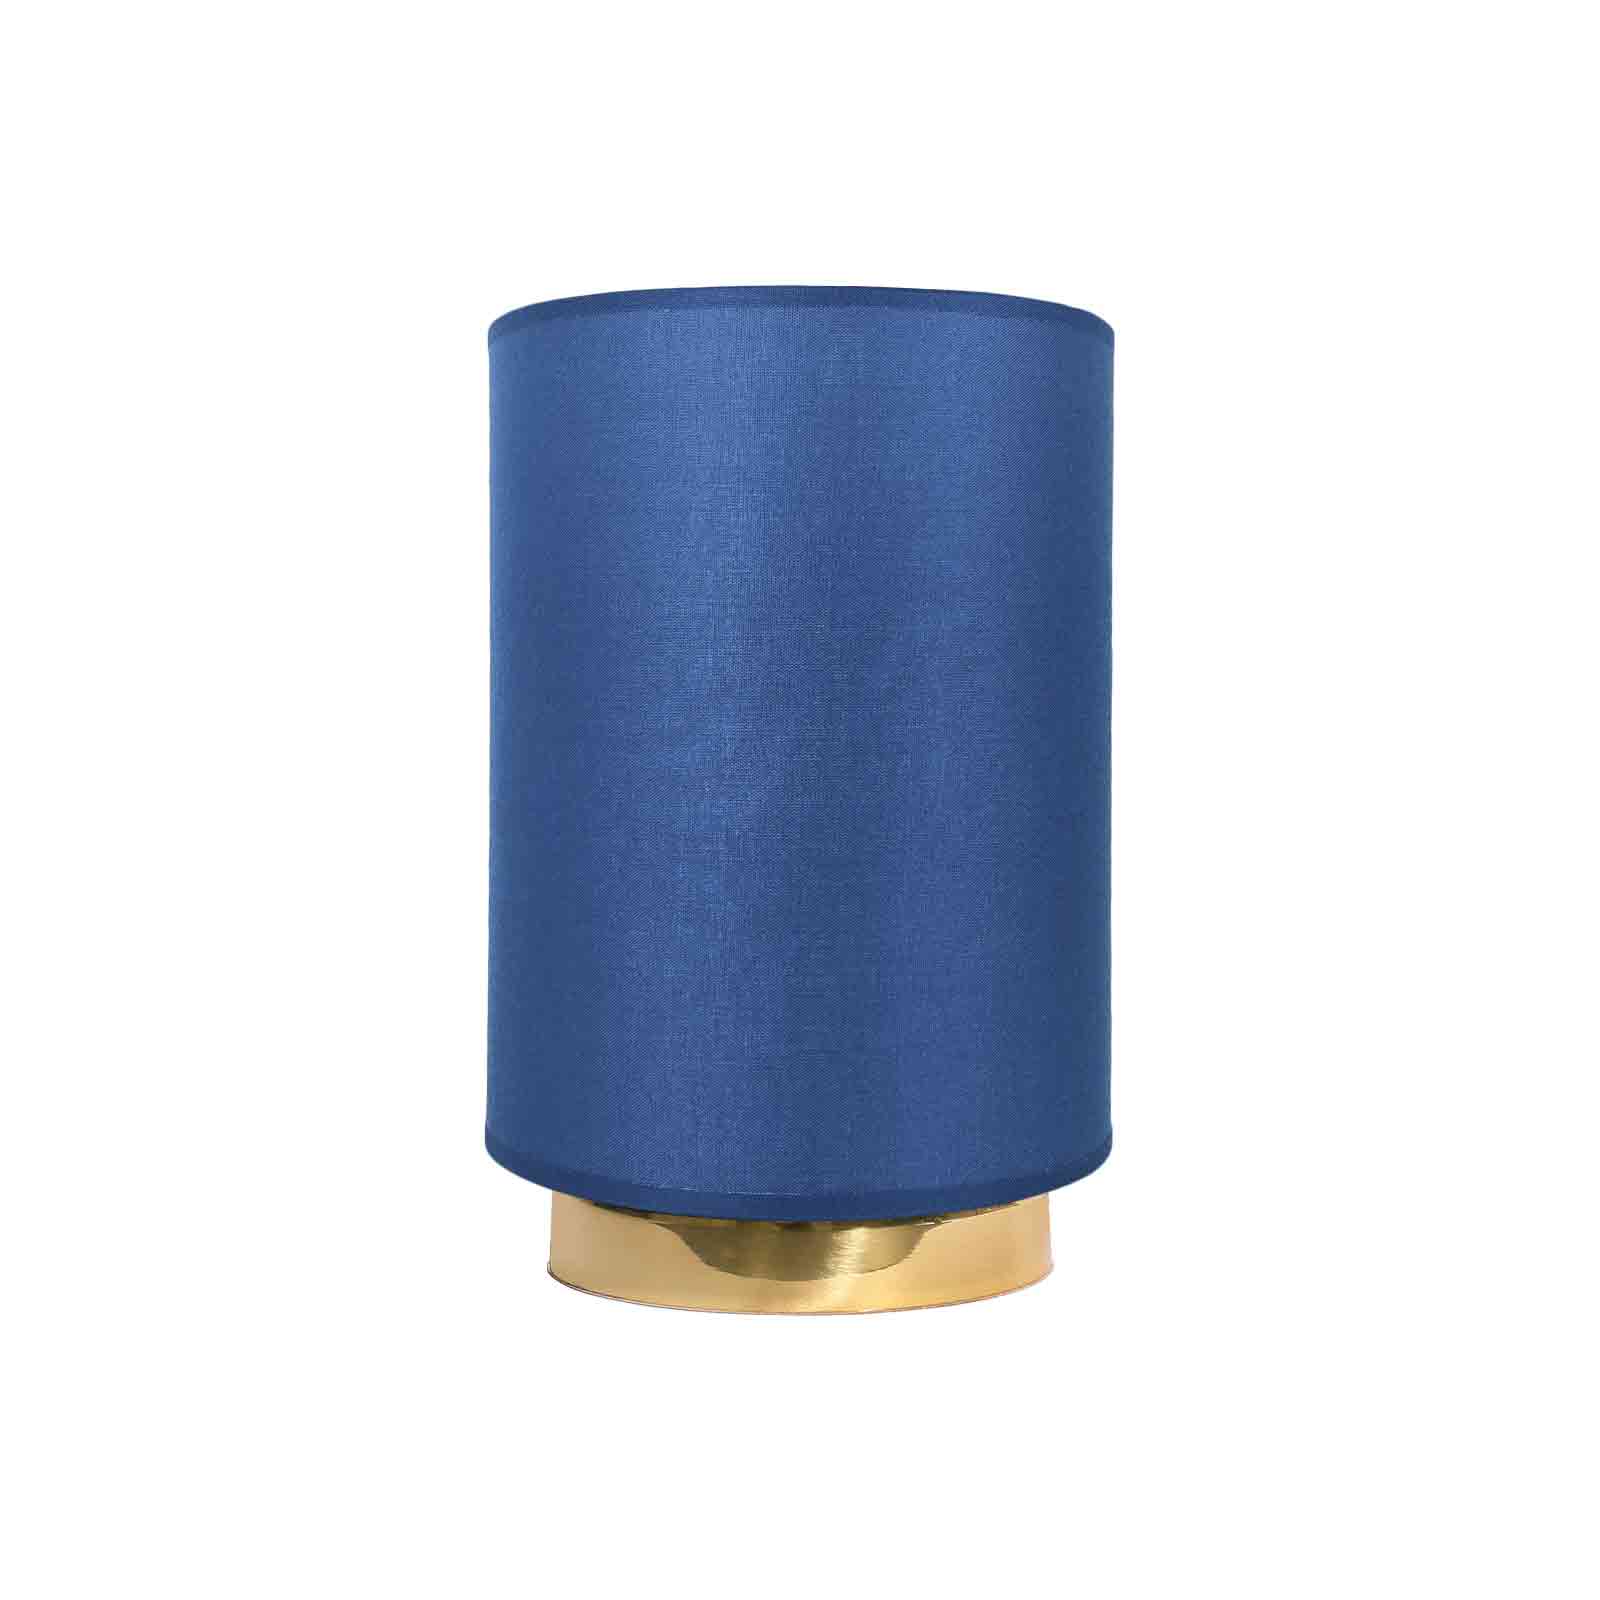 Tischlampe Stoffschirm H: 24 cm Blau Messing massiv E27